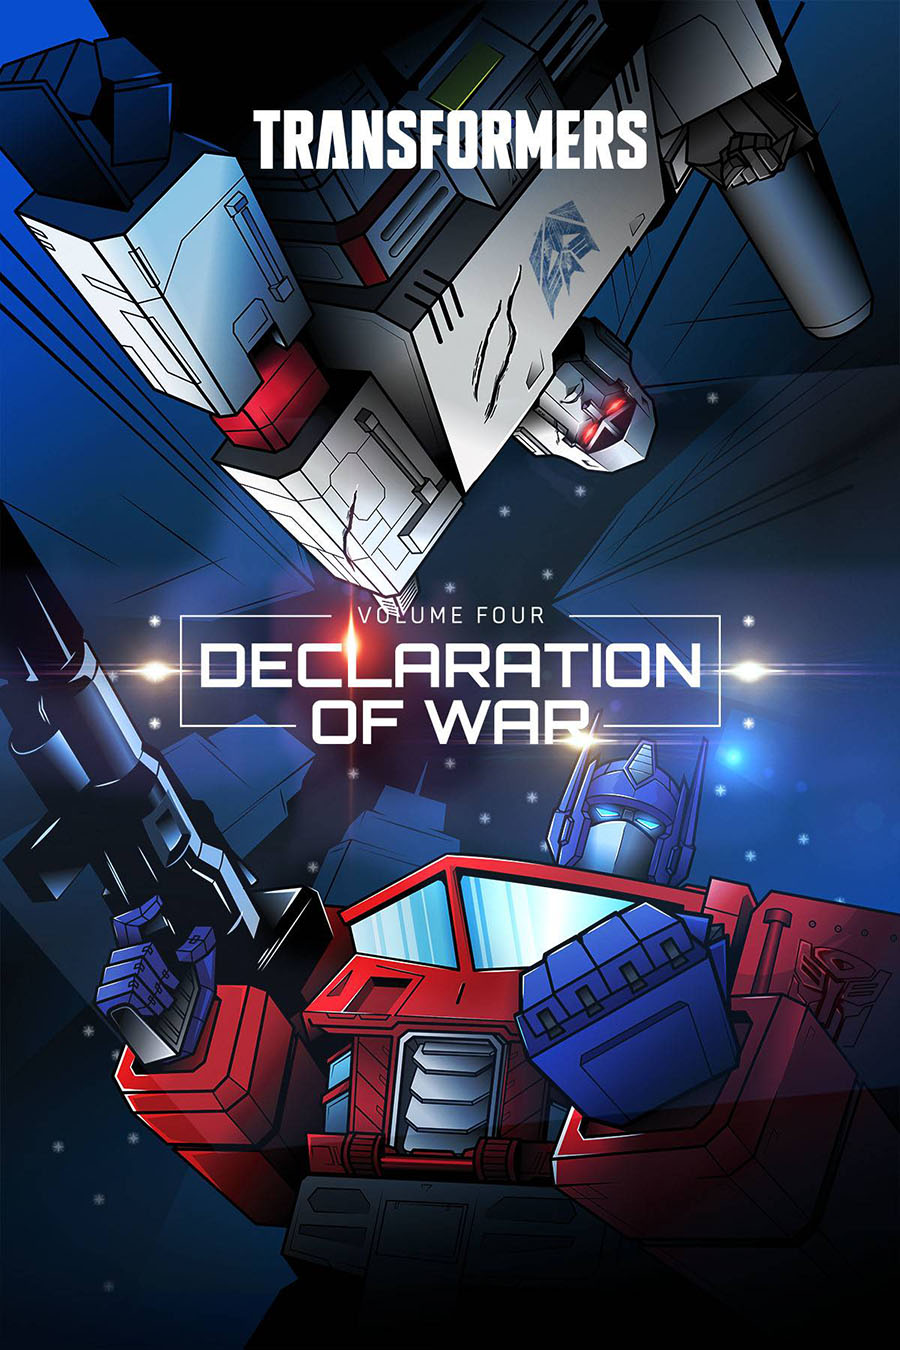 Transformers (2019) Vol 4 Declaration Of War HC